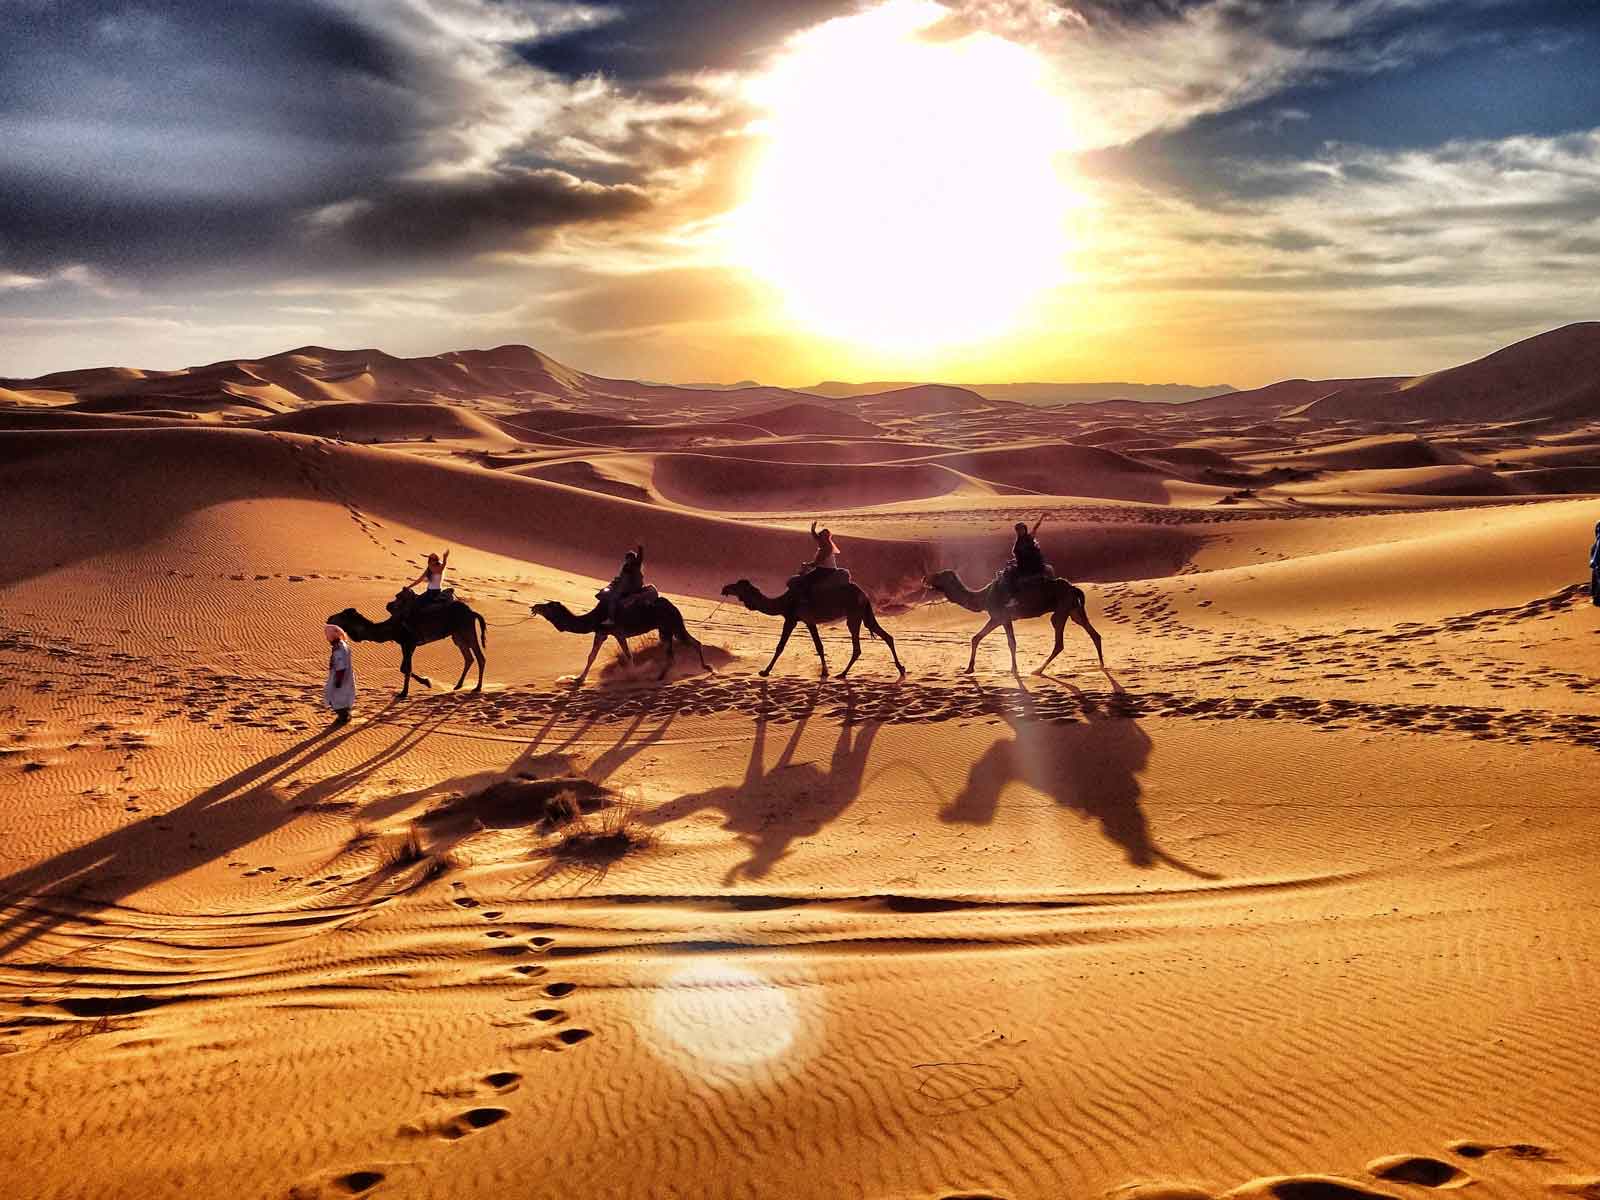 Morocco desert tours 4 days from Marrakech